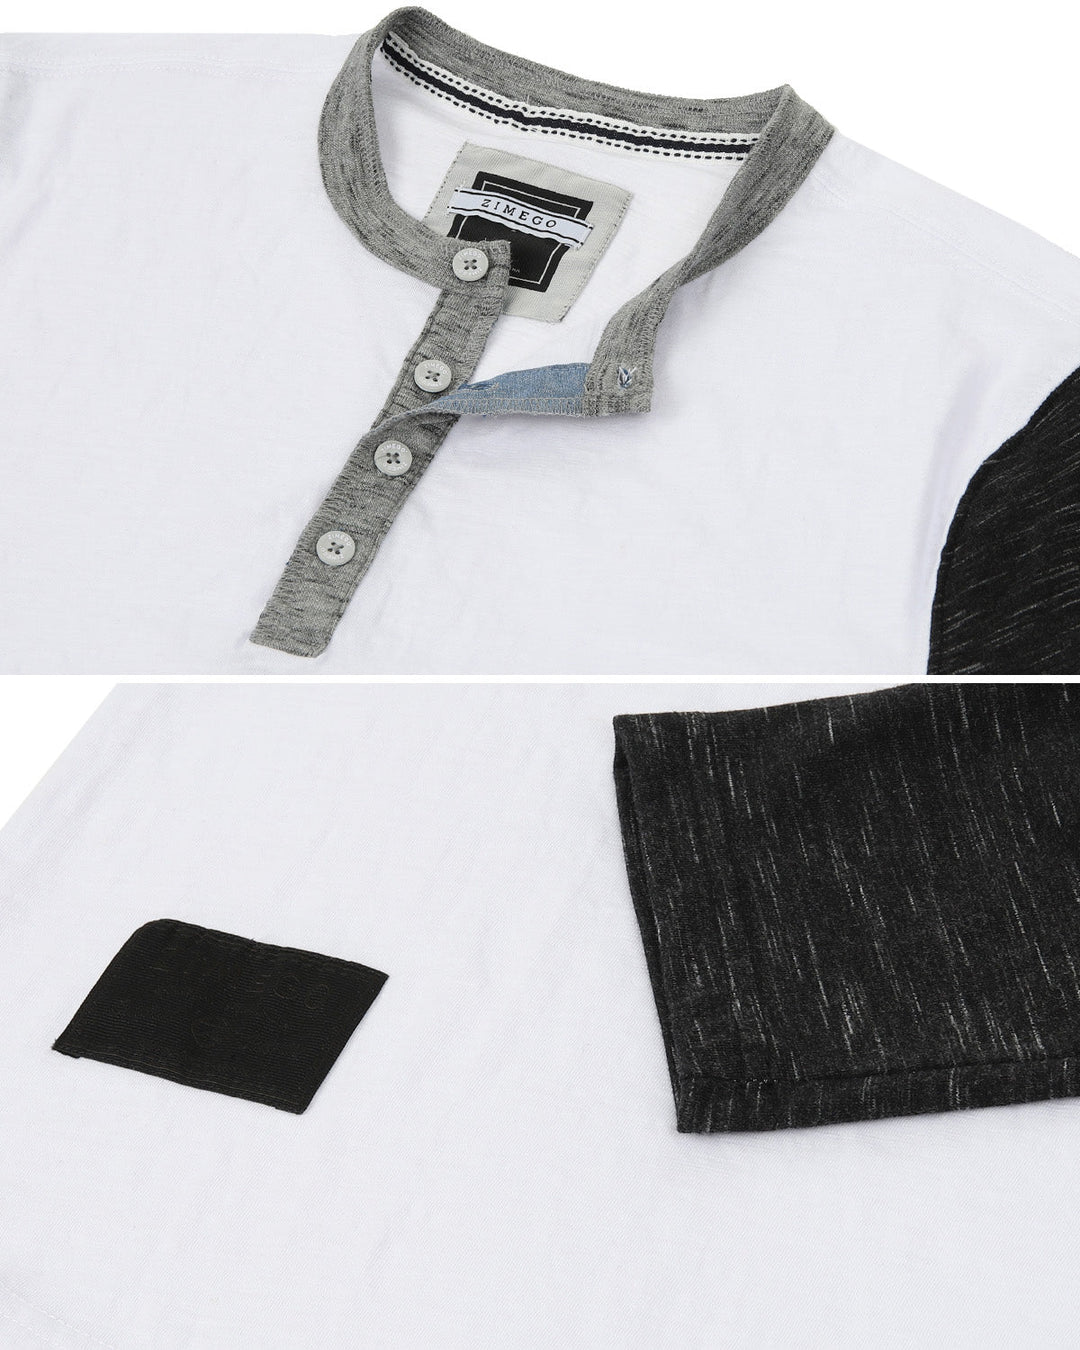 ZIMEGO Men's 3/4 Sleeve Black & White Baseball Henley – Casual Athletic Button Crewneck Shirts-6